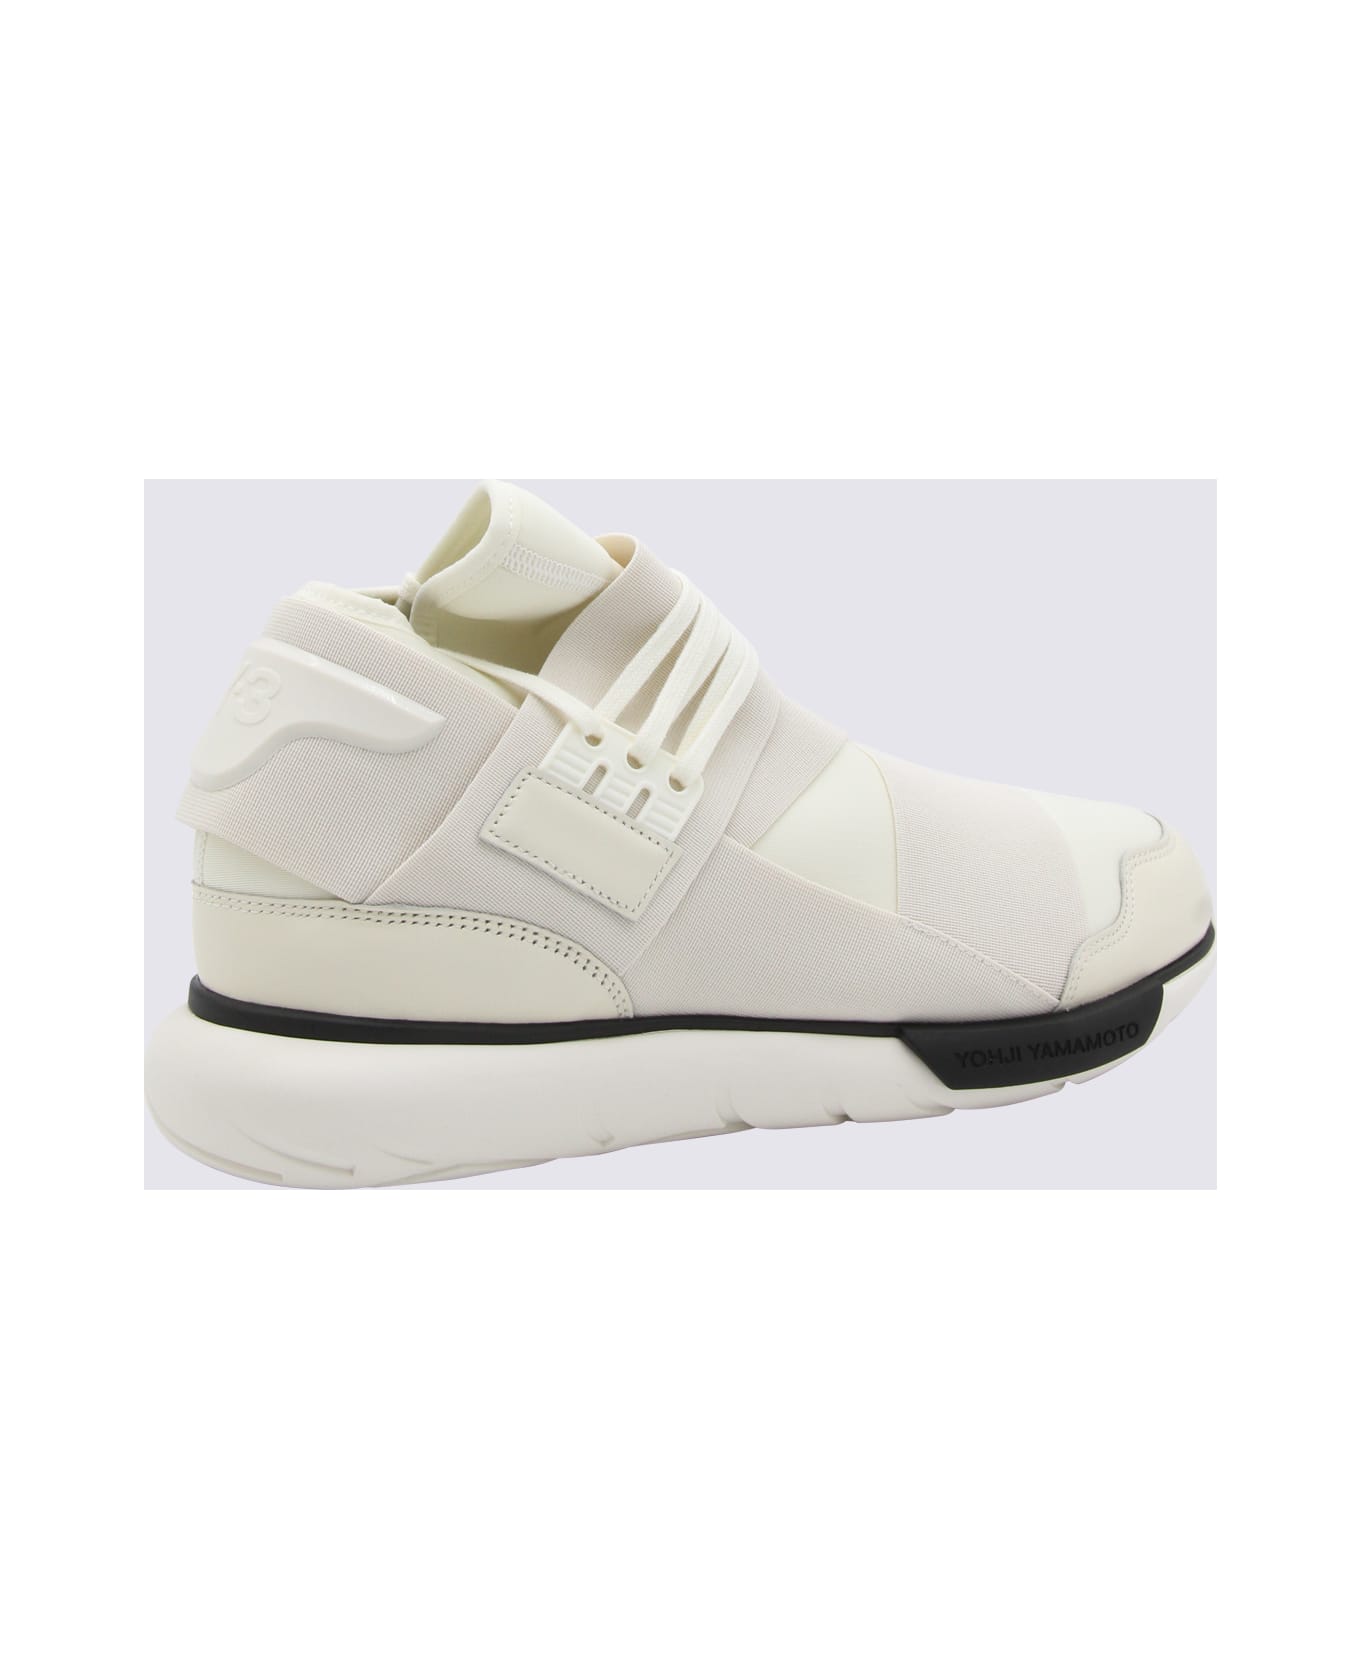 Y-3 White Canvas Sneakers - OFF WHITE/CREAM WHITE/BLACK スニーカー